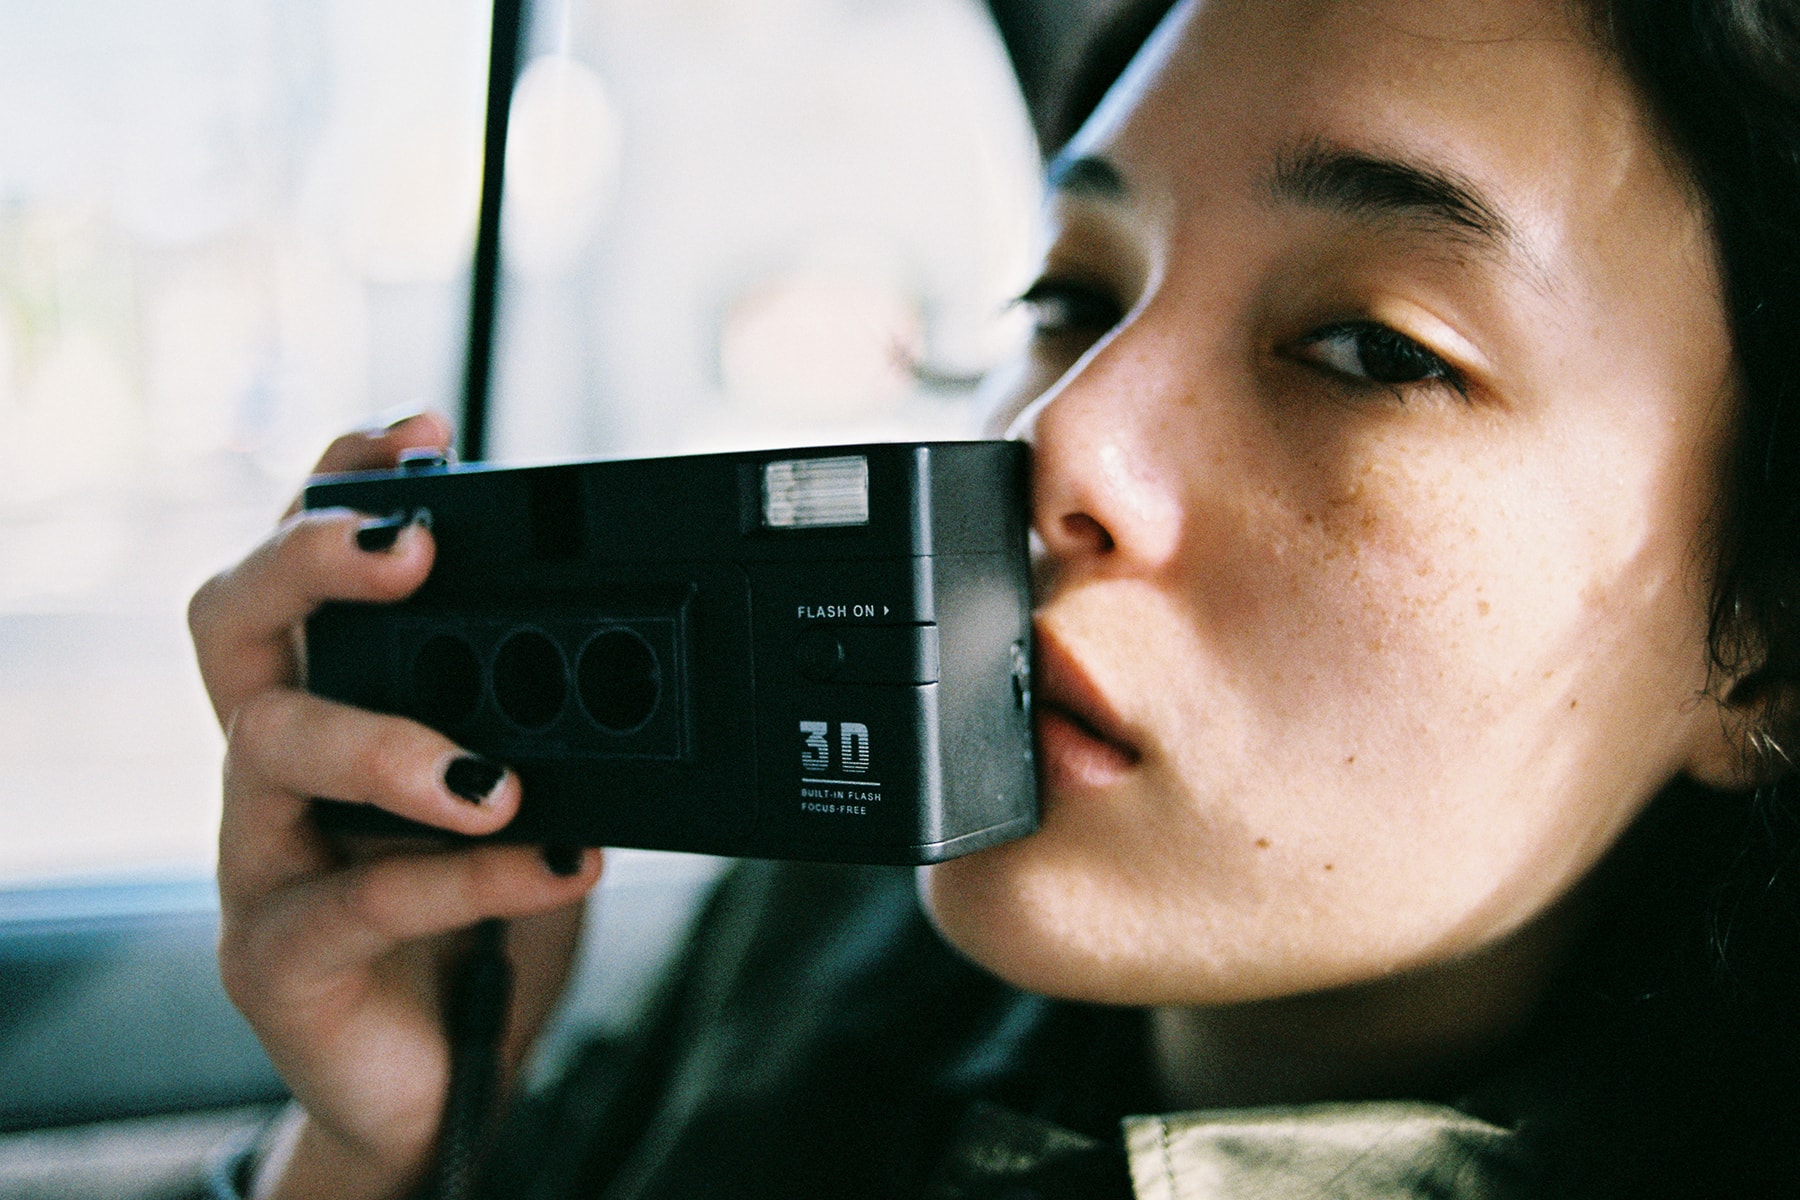 RETO 發佈全新 3D 菲林相機 RETO3D